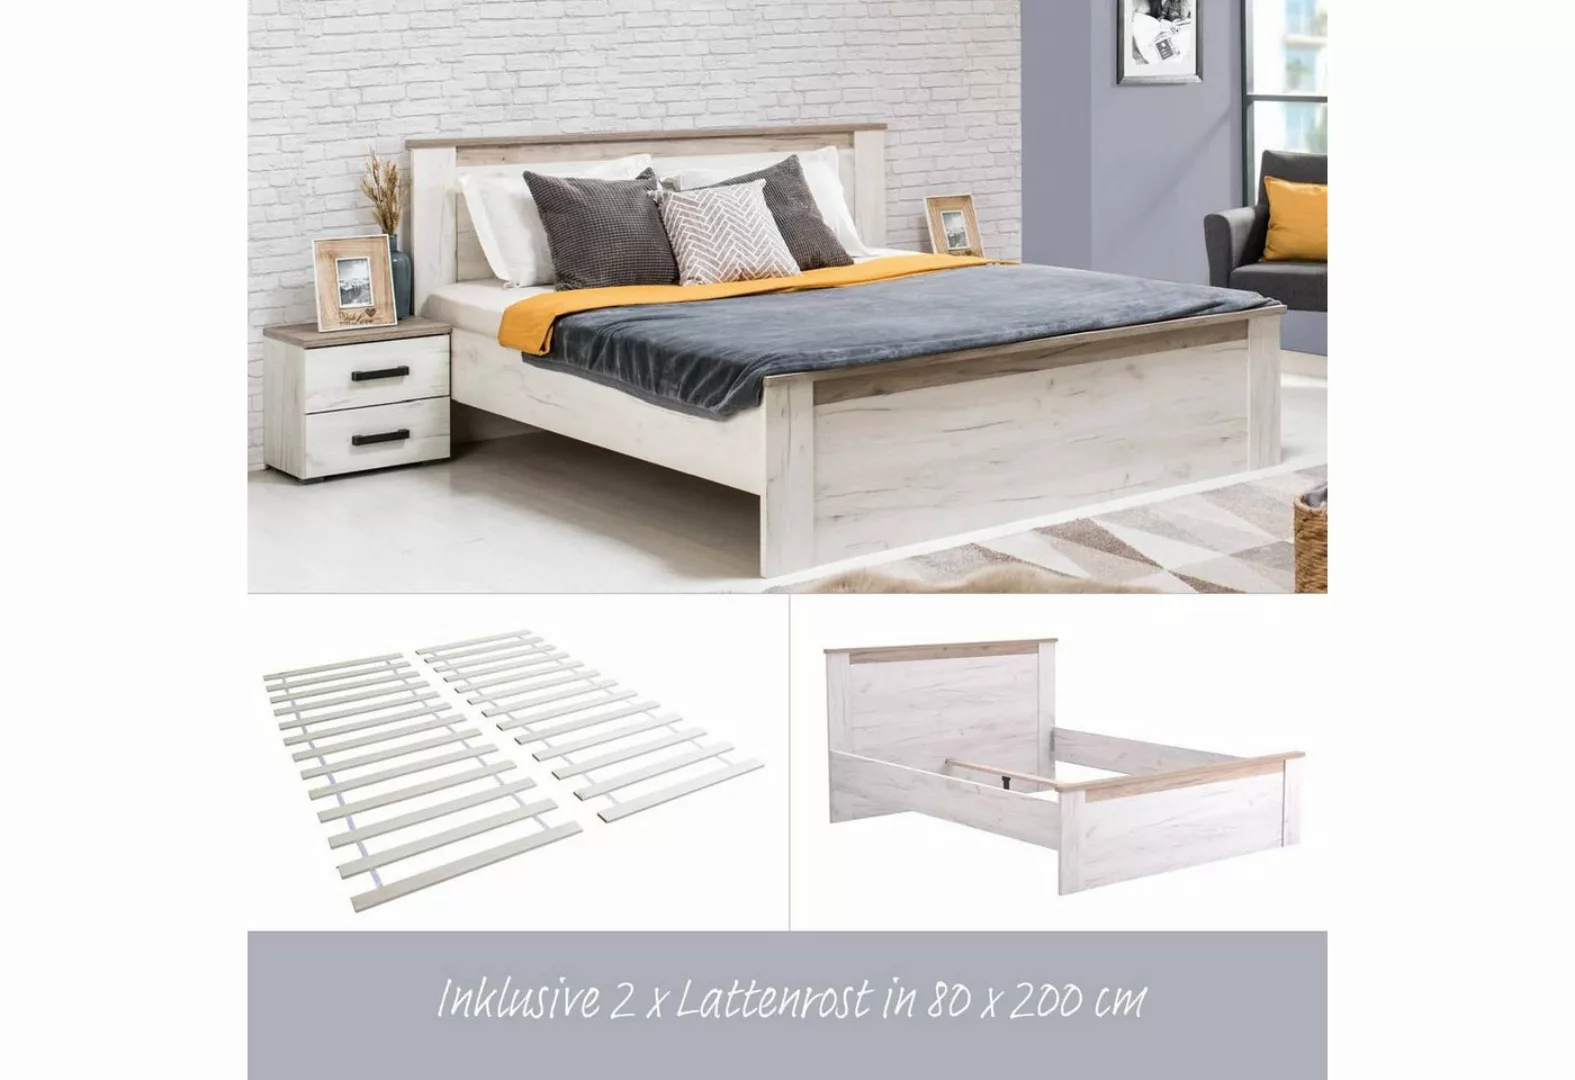 Homestyle4u Holzbett 160x200 Doppelbett Bettgestell cm Lattenrost Weiß günstig online kaufen